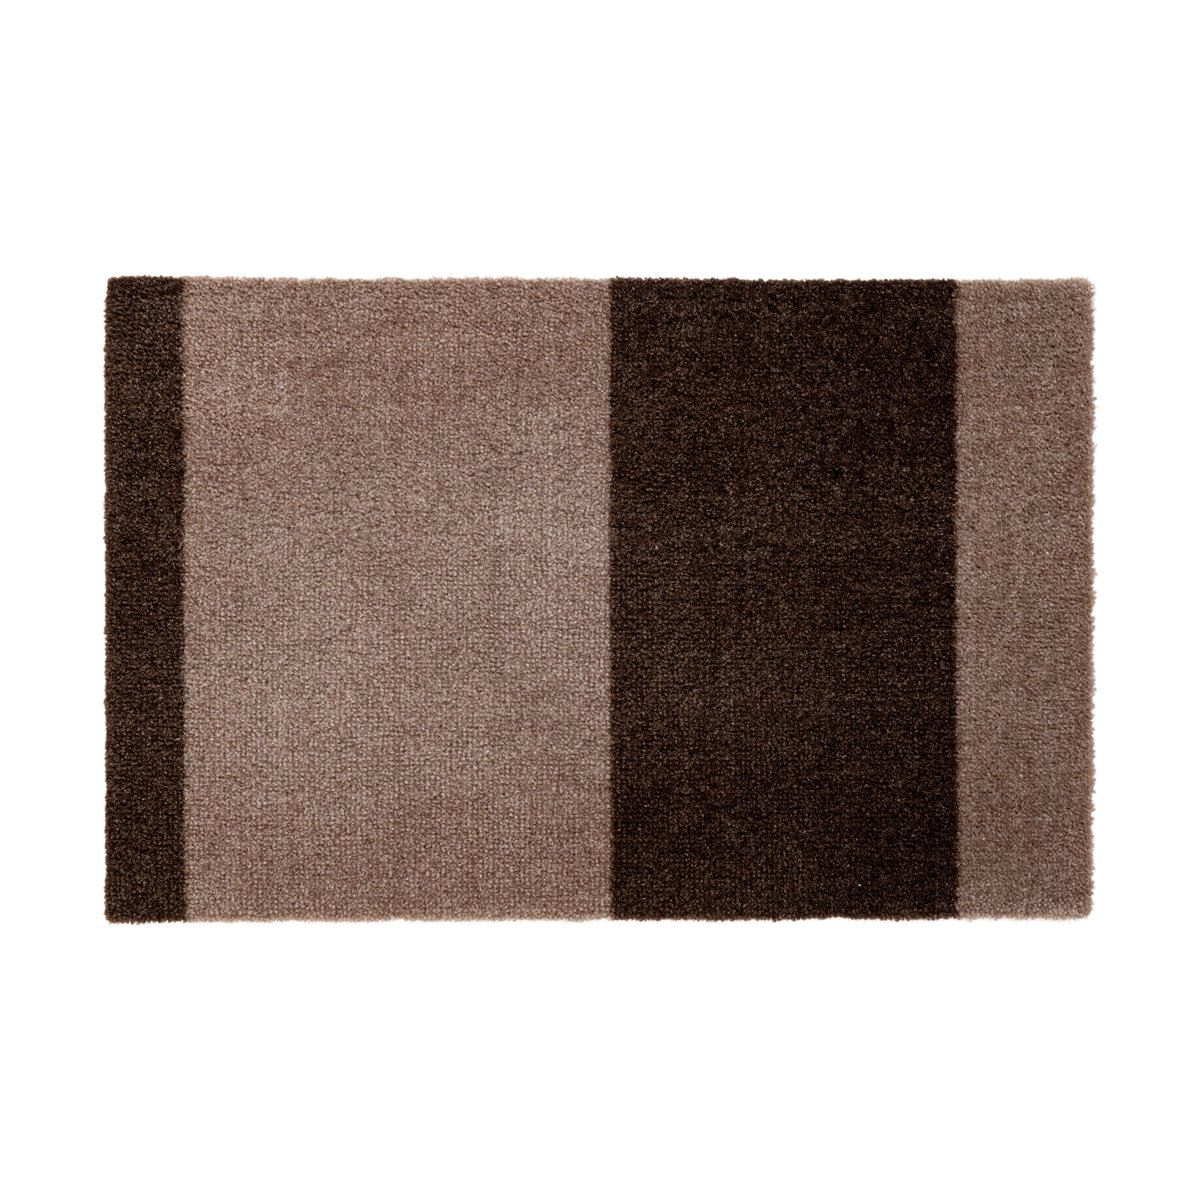 Bilde av tica copenhagen Stripes by tica horisontal dørmatte Sand-brown 40 x 60 cm